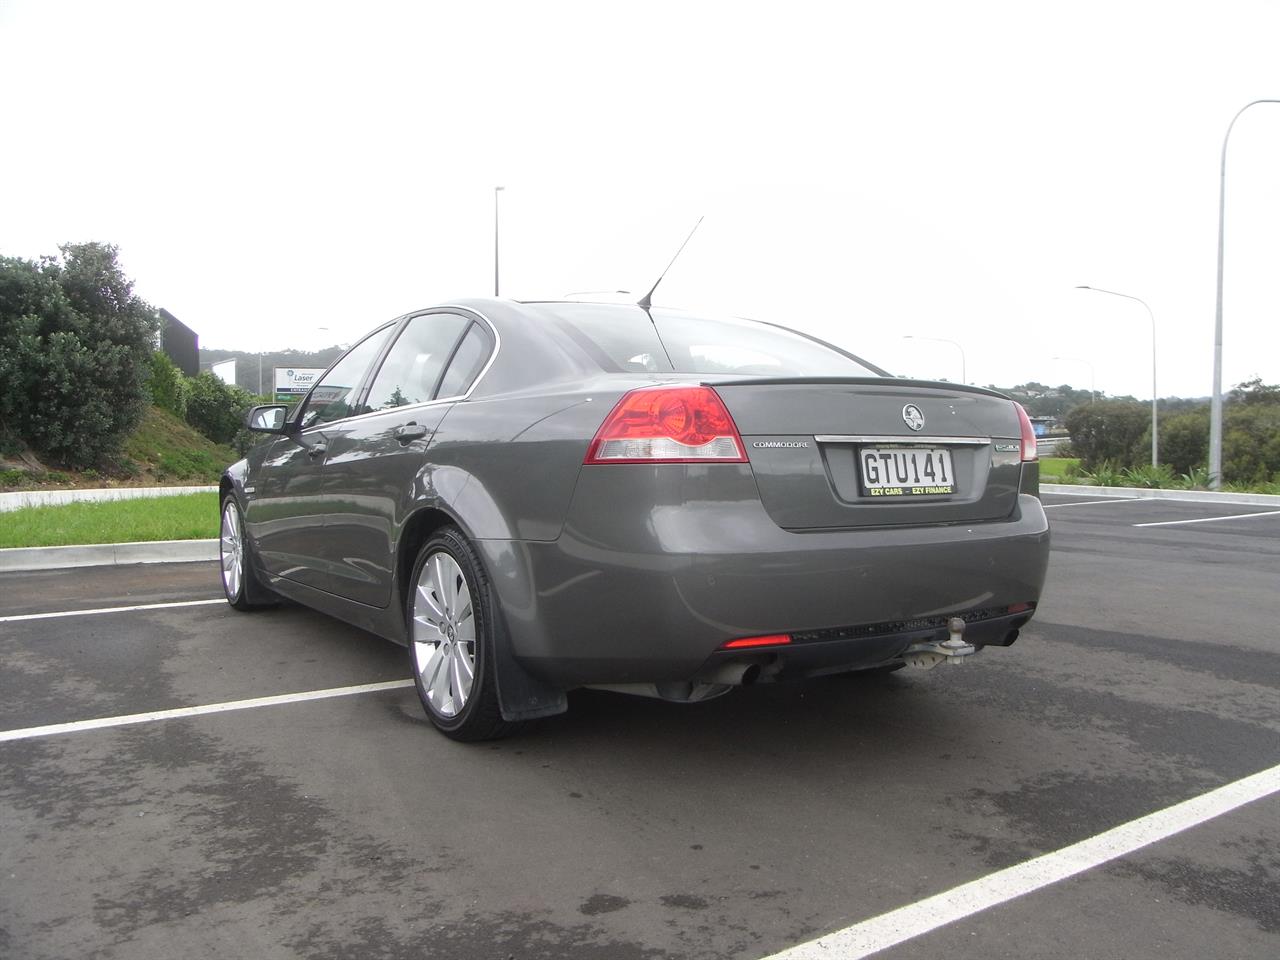 2013 Holden Commodore Z-Series V6 image 5